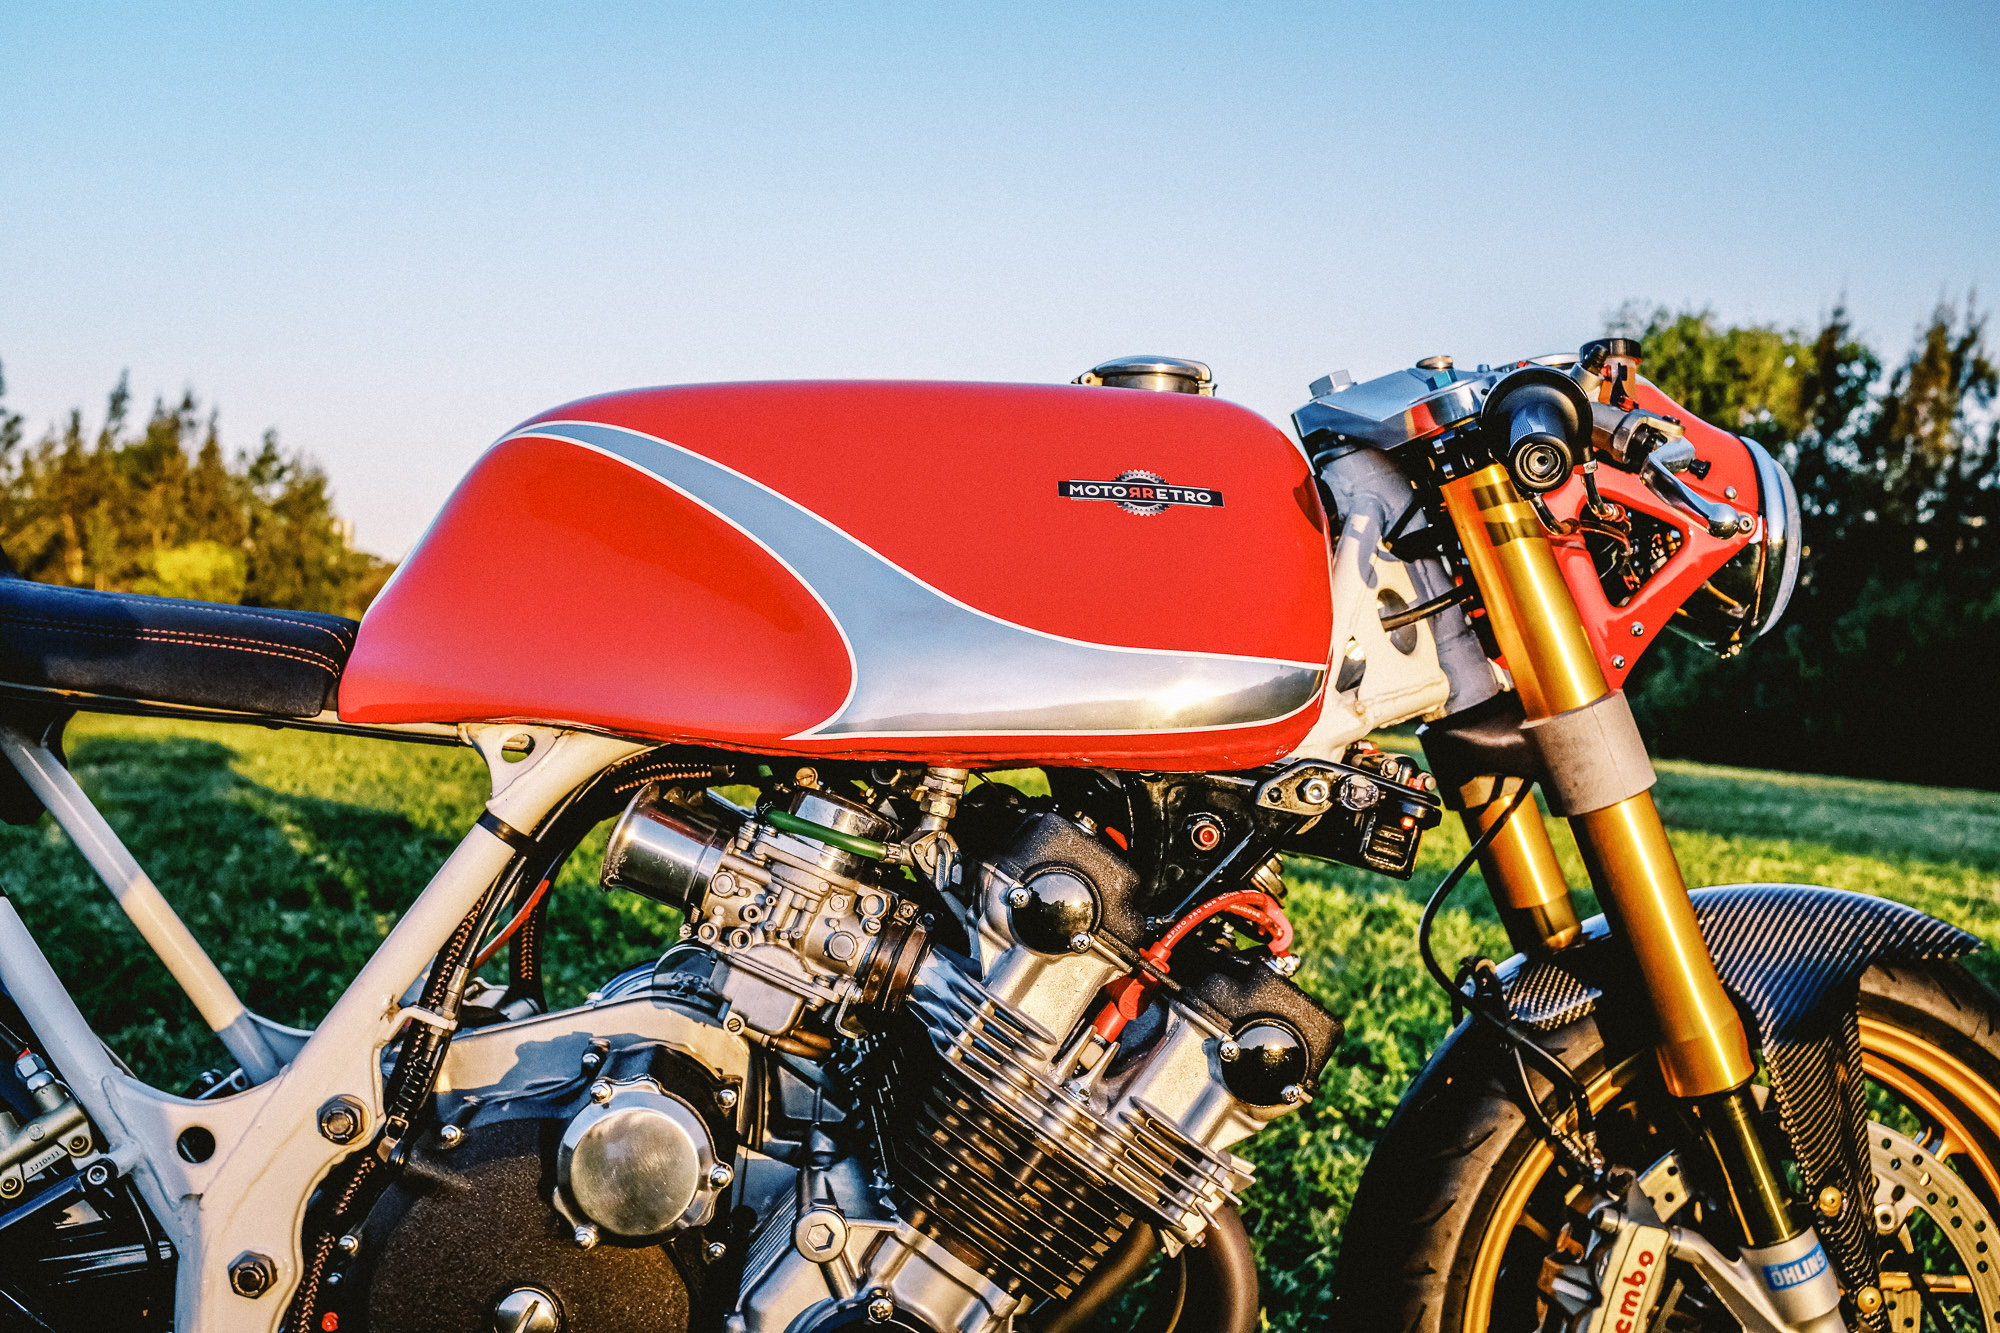 Australia's Most Famous CBX – The Honda CBX Cafe Racer By Motorretro